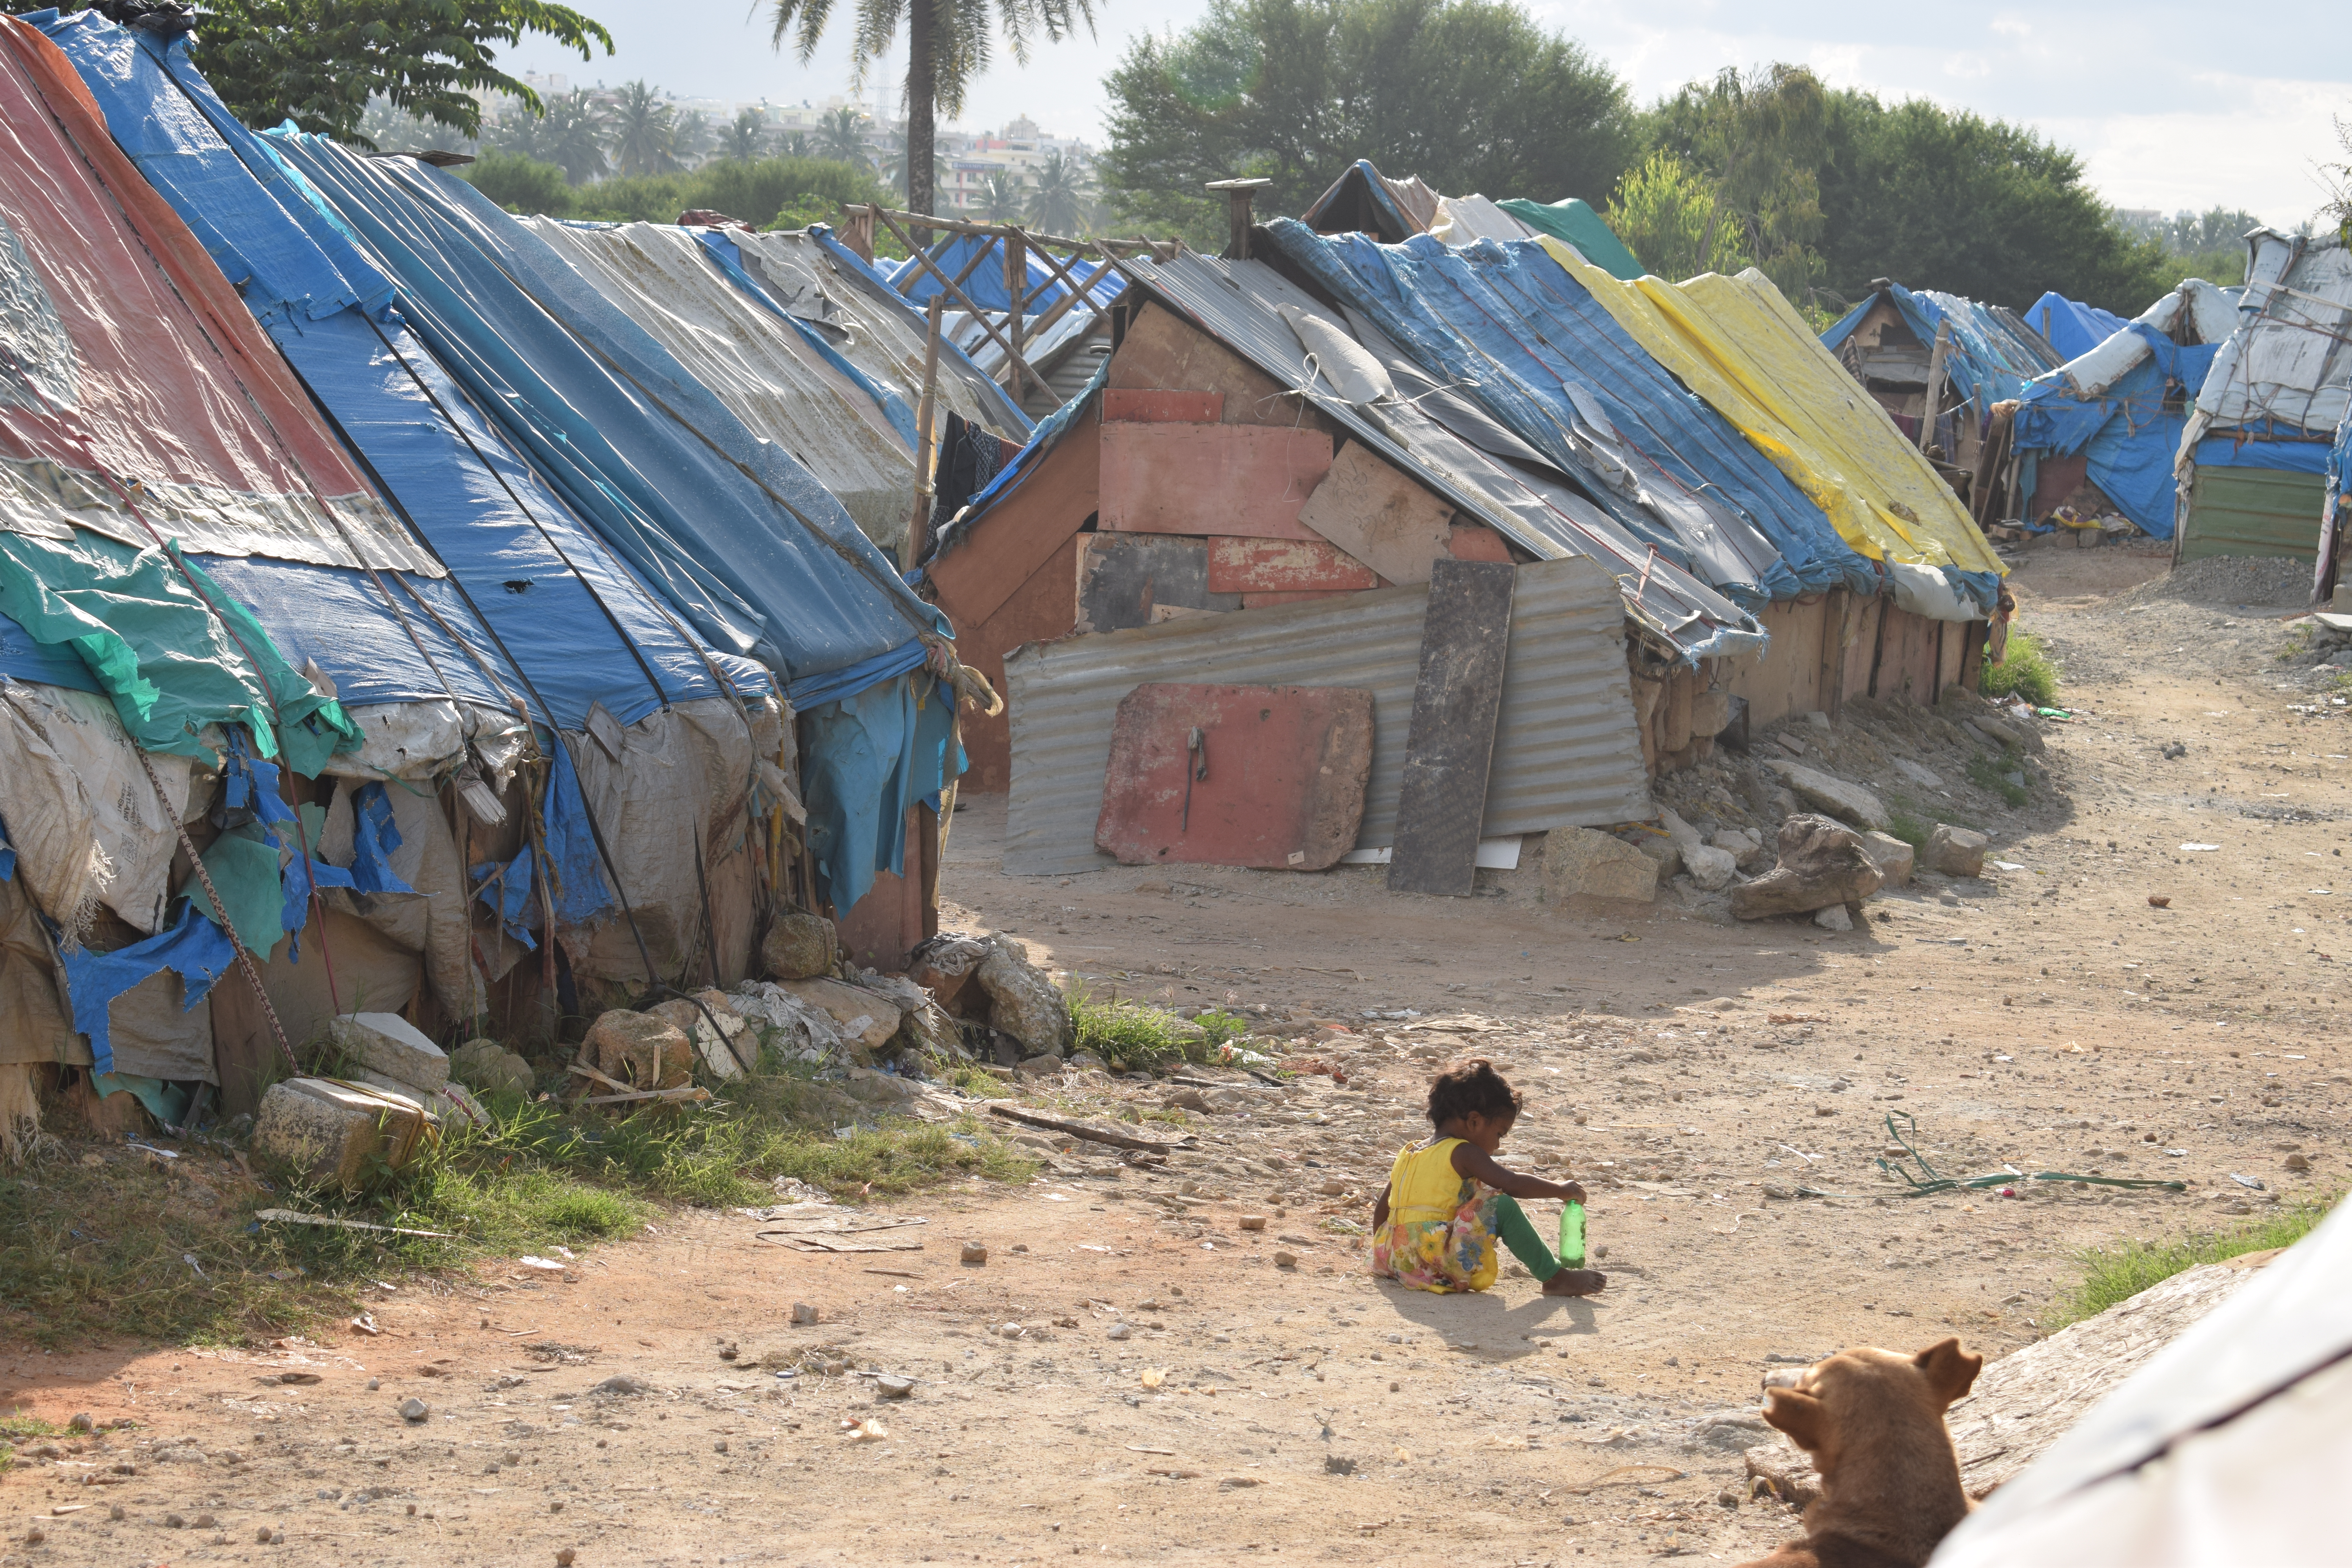 Life, livelihood and virus - Migrant camp